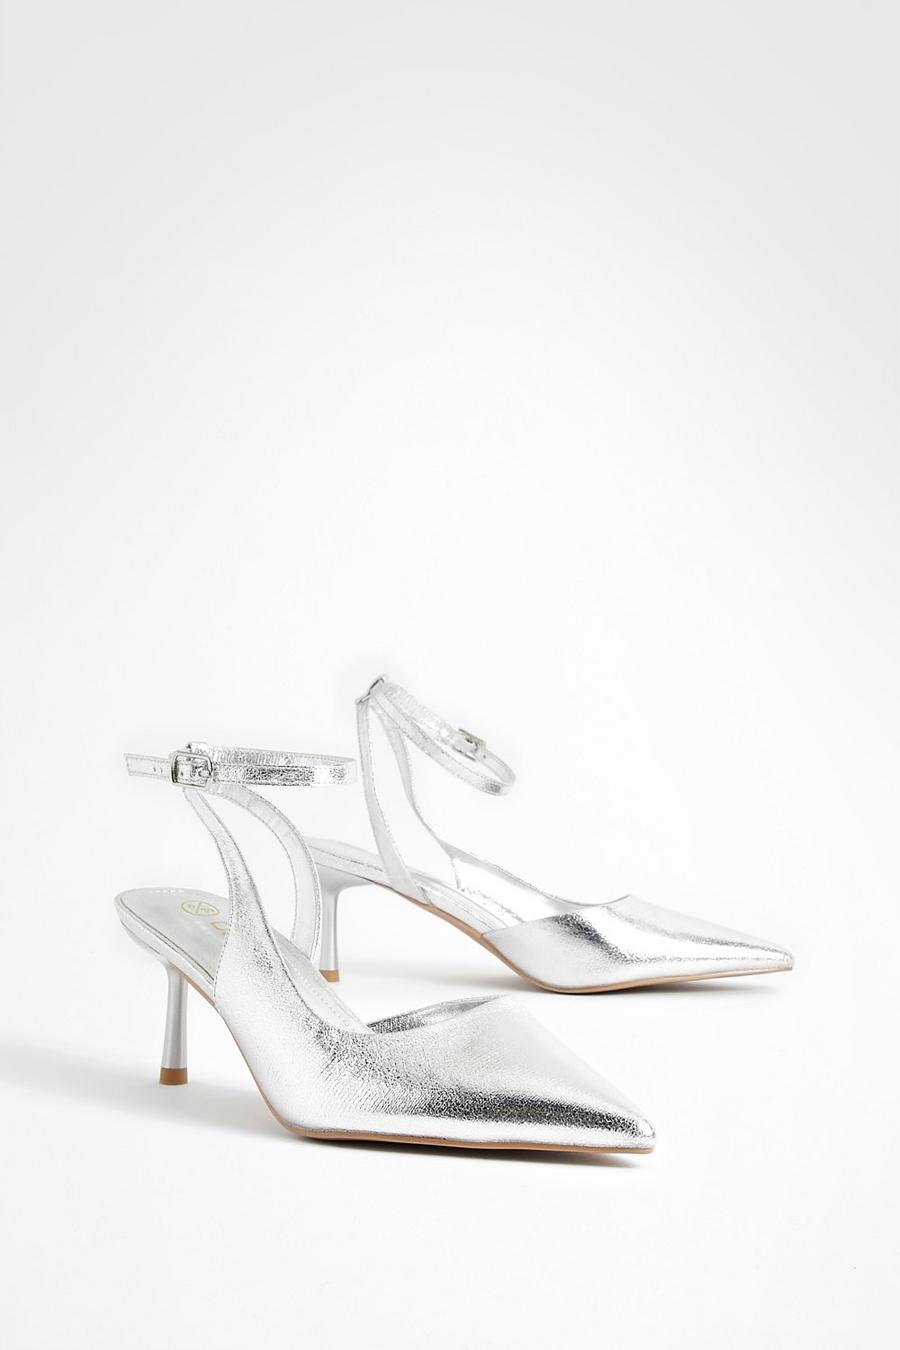 Zapatos de salón bajos cruzados metálicos, Silver